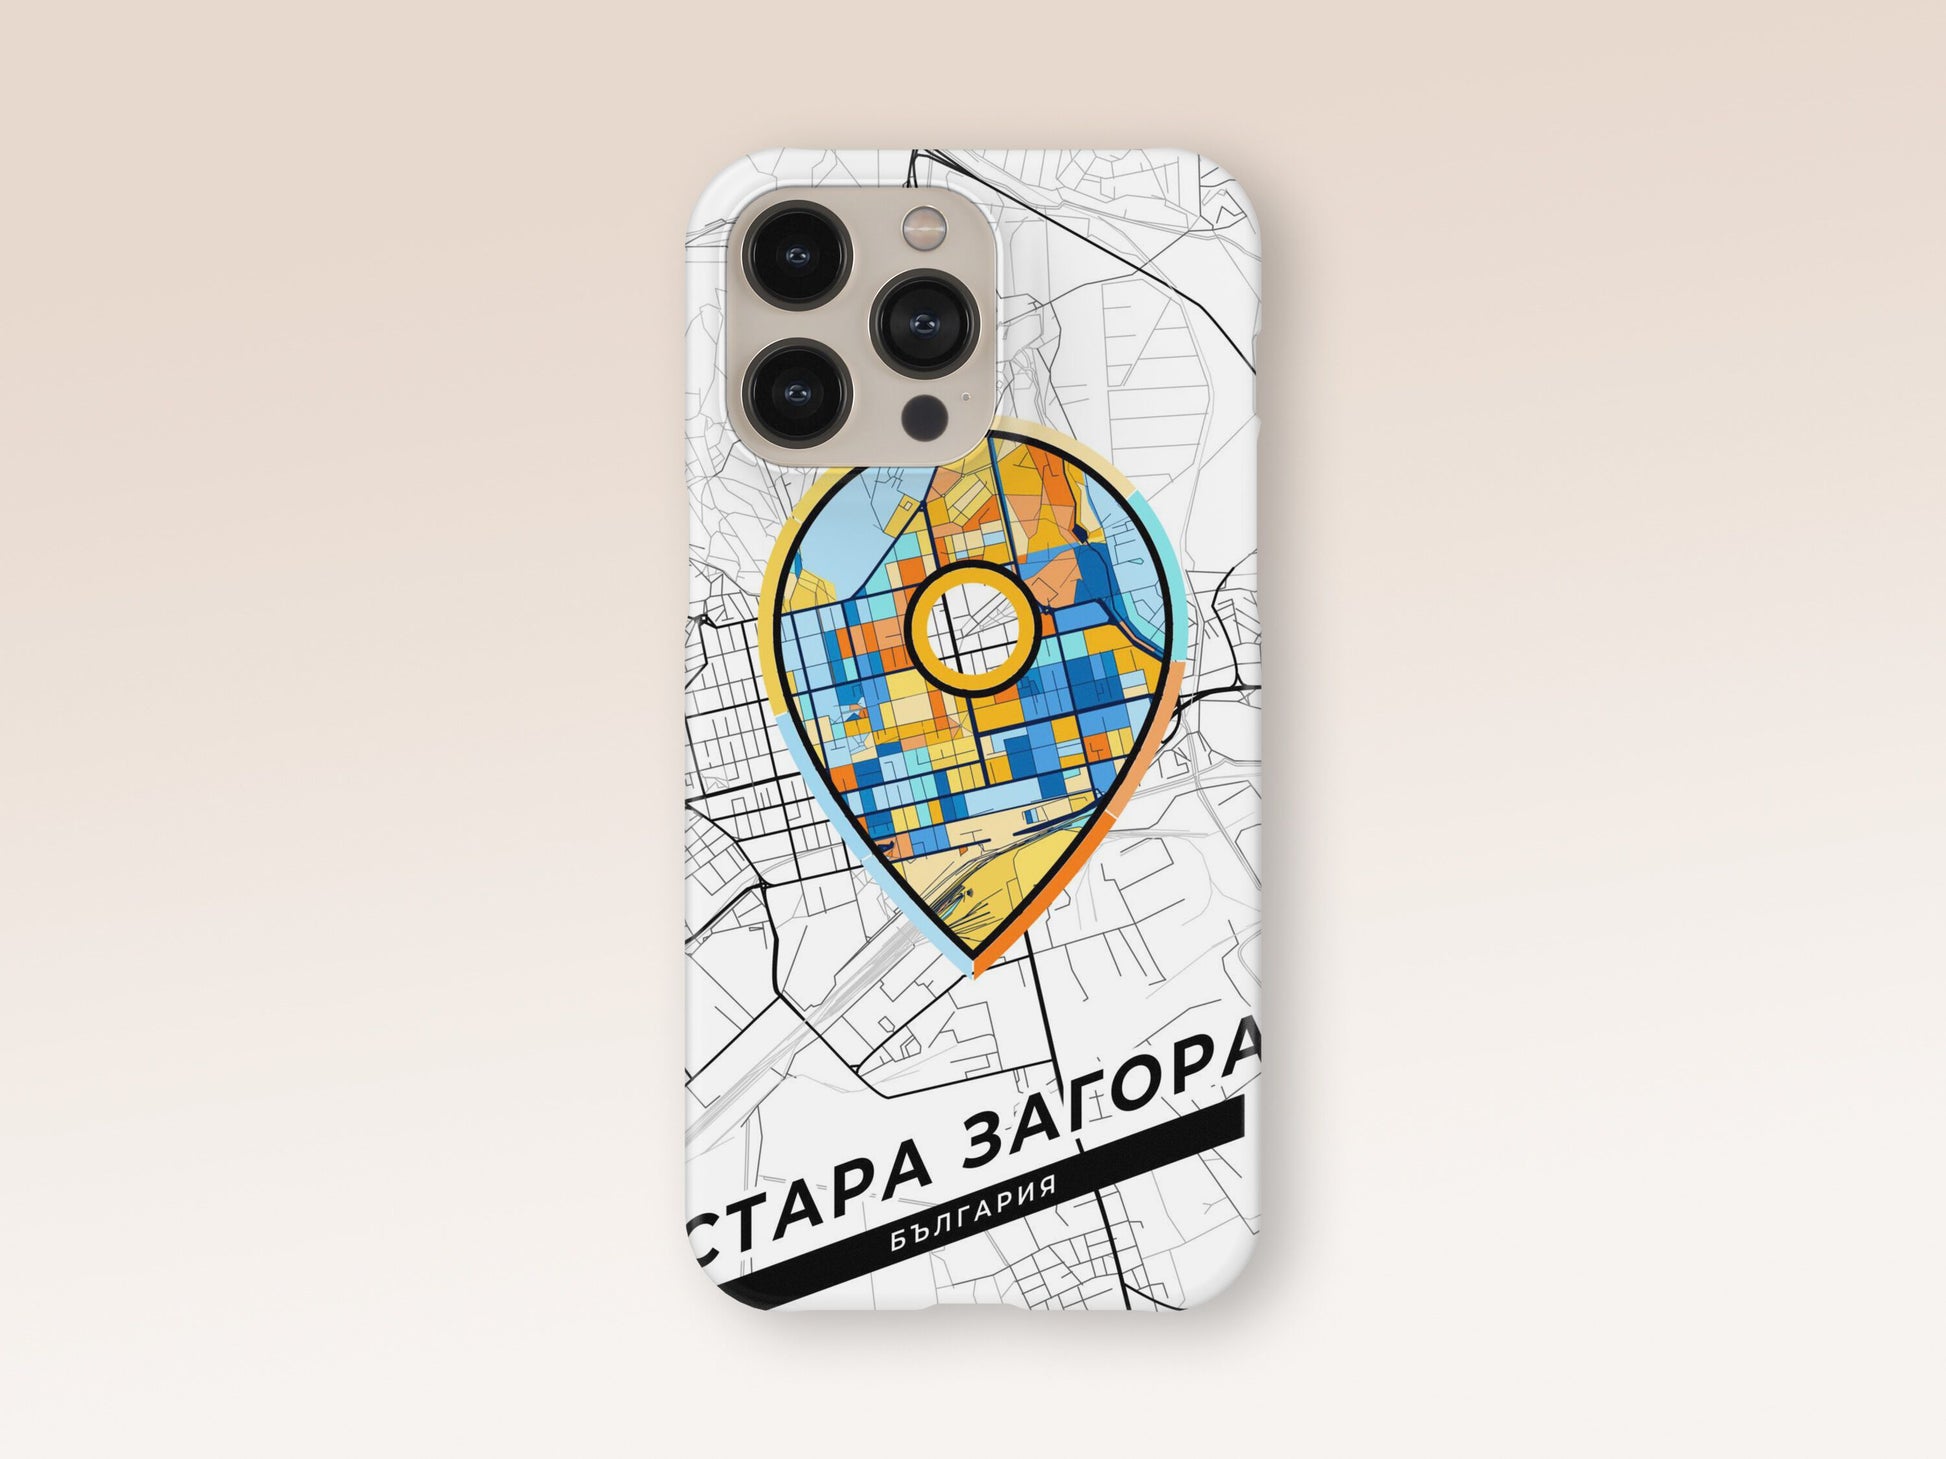 Стара Загора България slim phone case with colorful icon. Birthday, wedding or housewarming gift. Couple match cases. 1